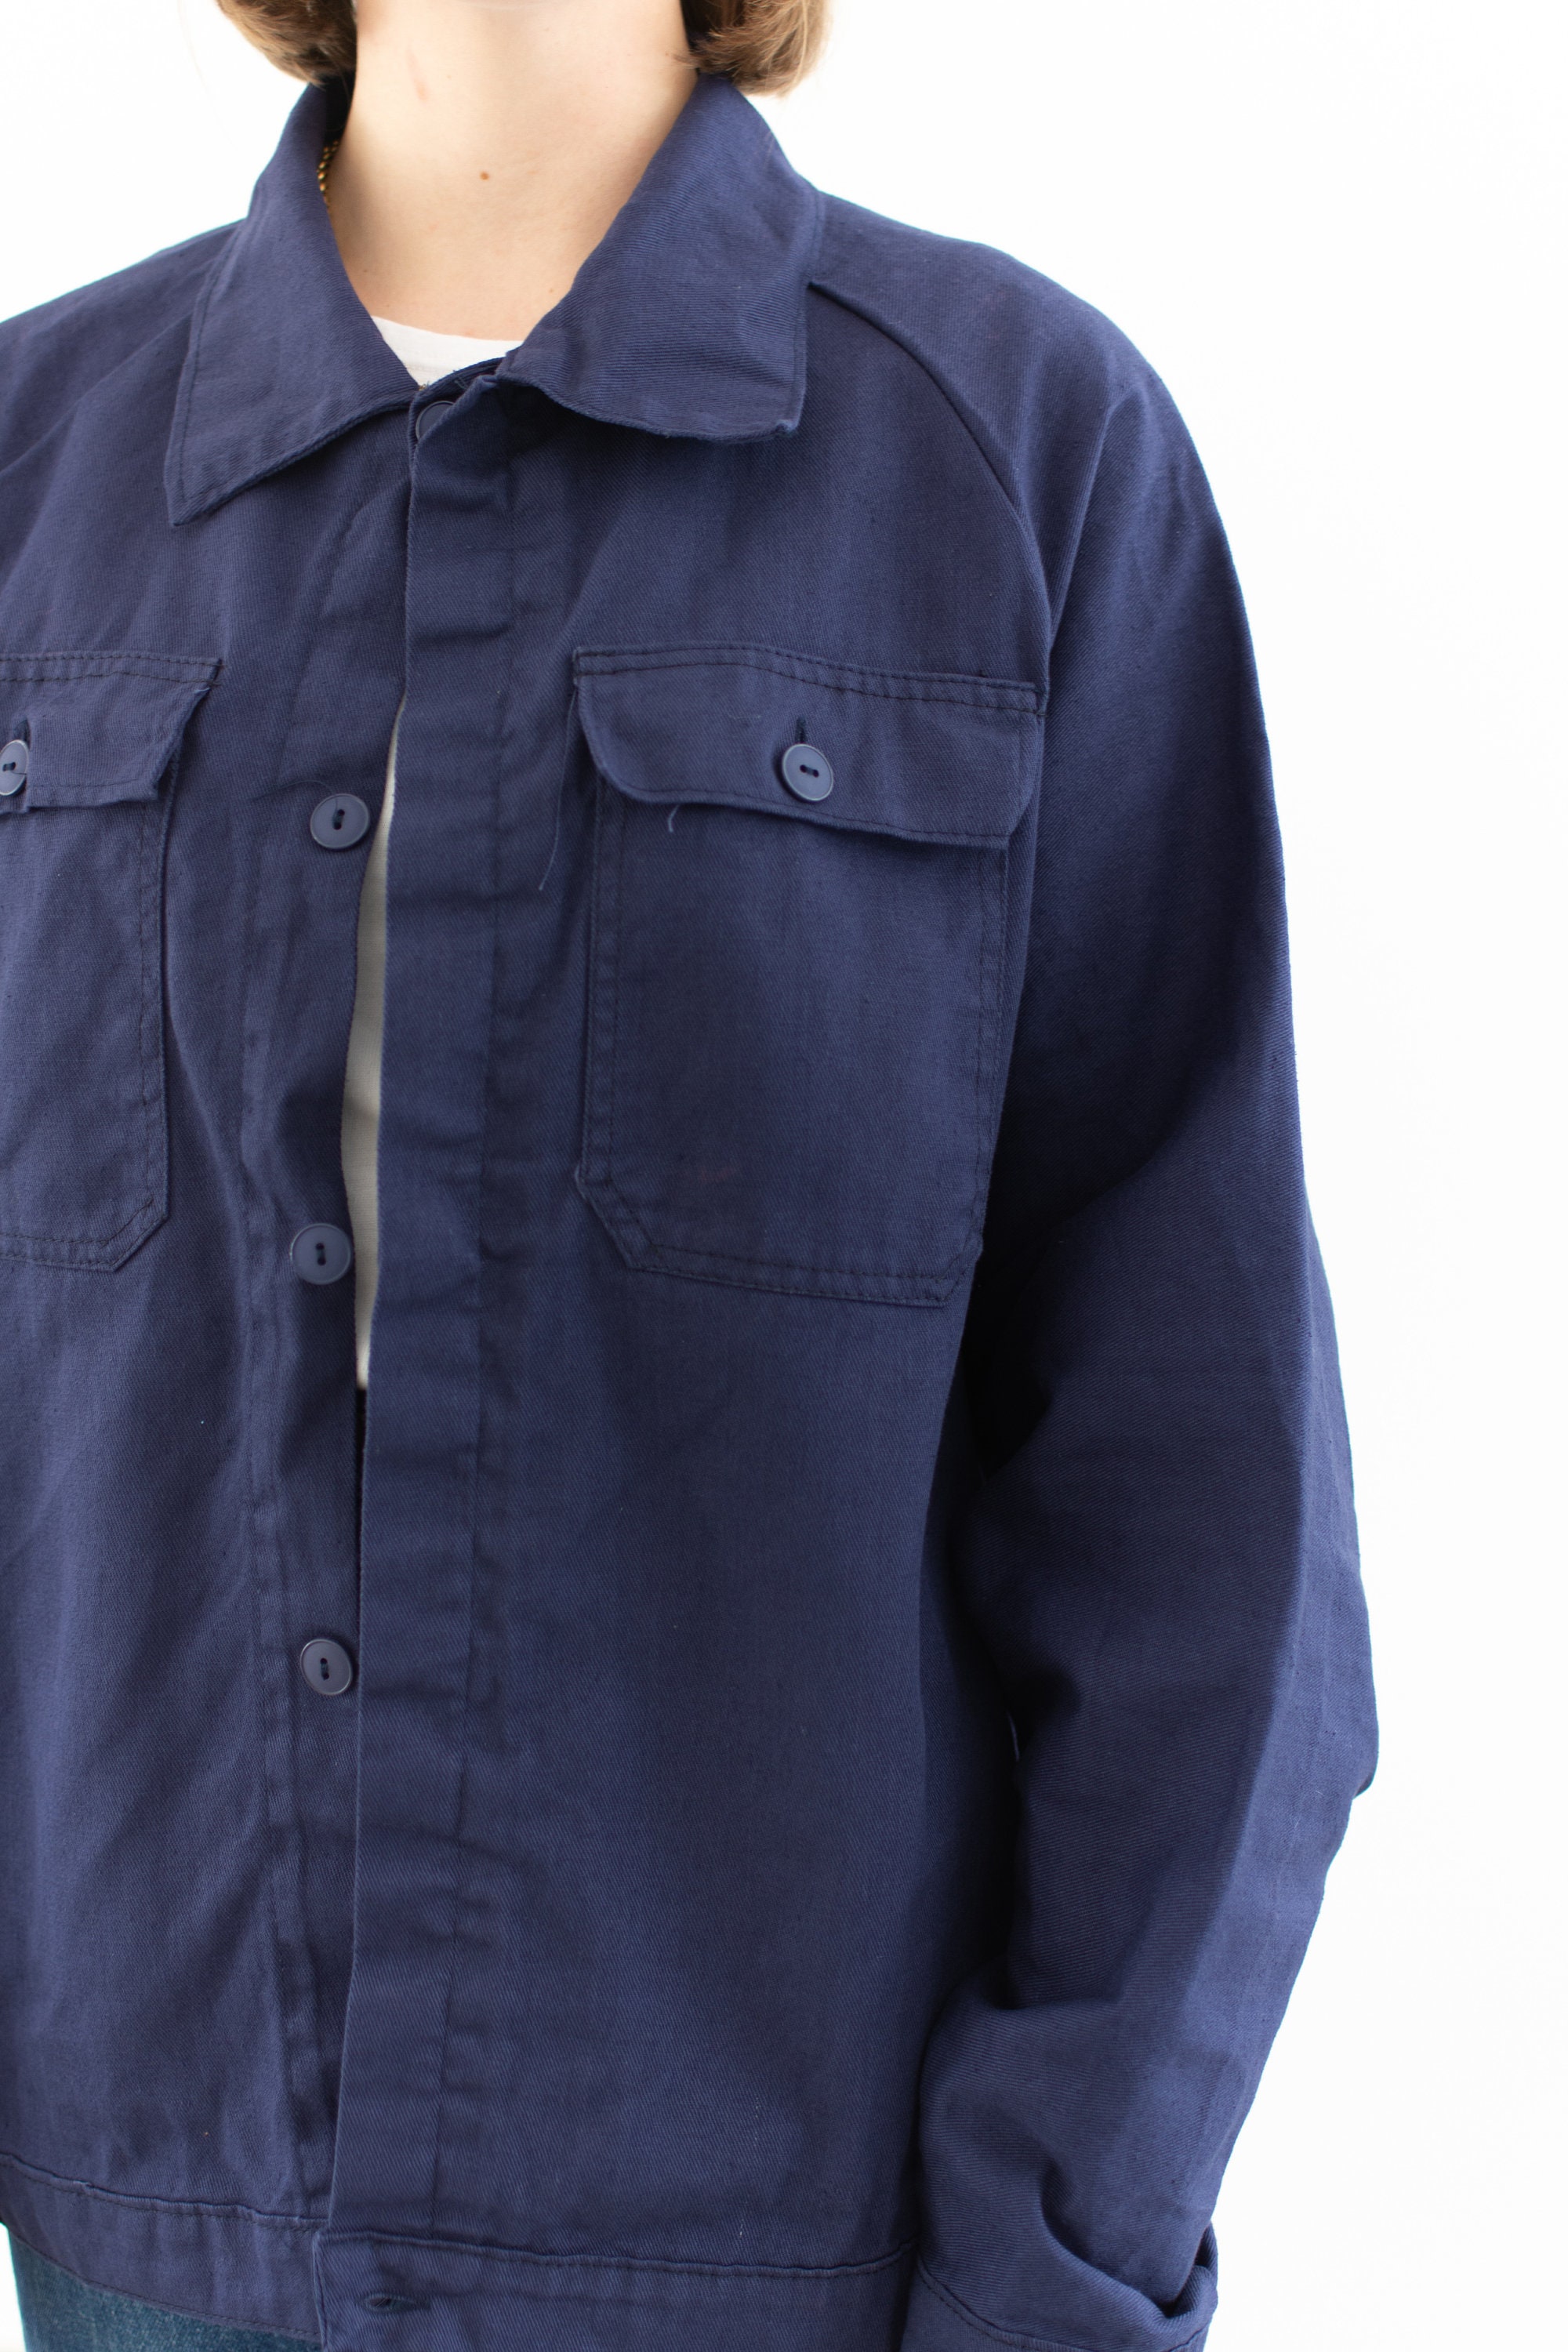 Vintage Blue Work Jacket | Raglan Sleeve Two Pocket Cotton Workwear ...